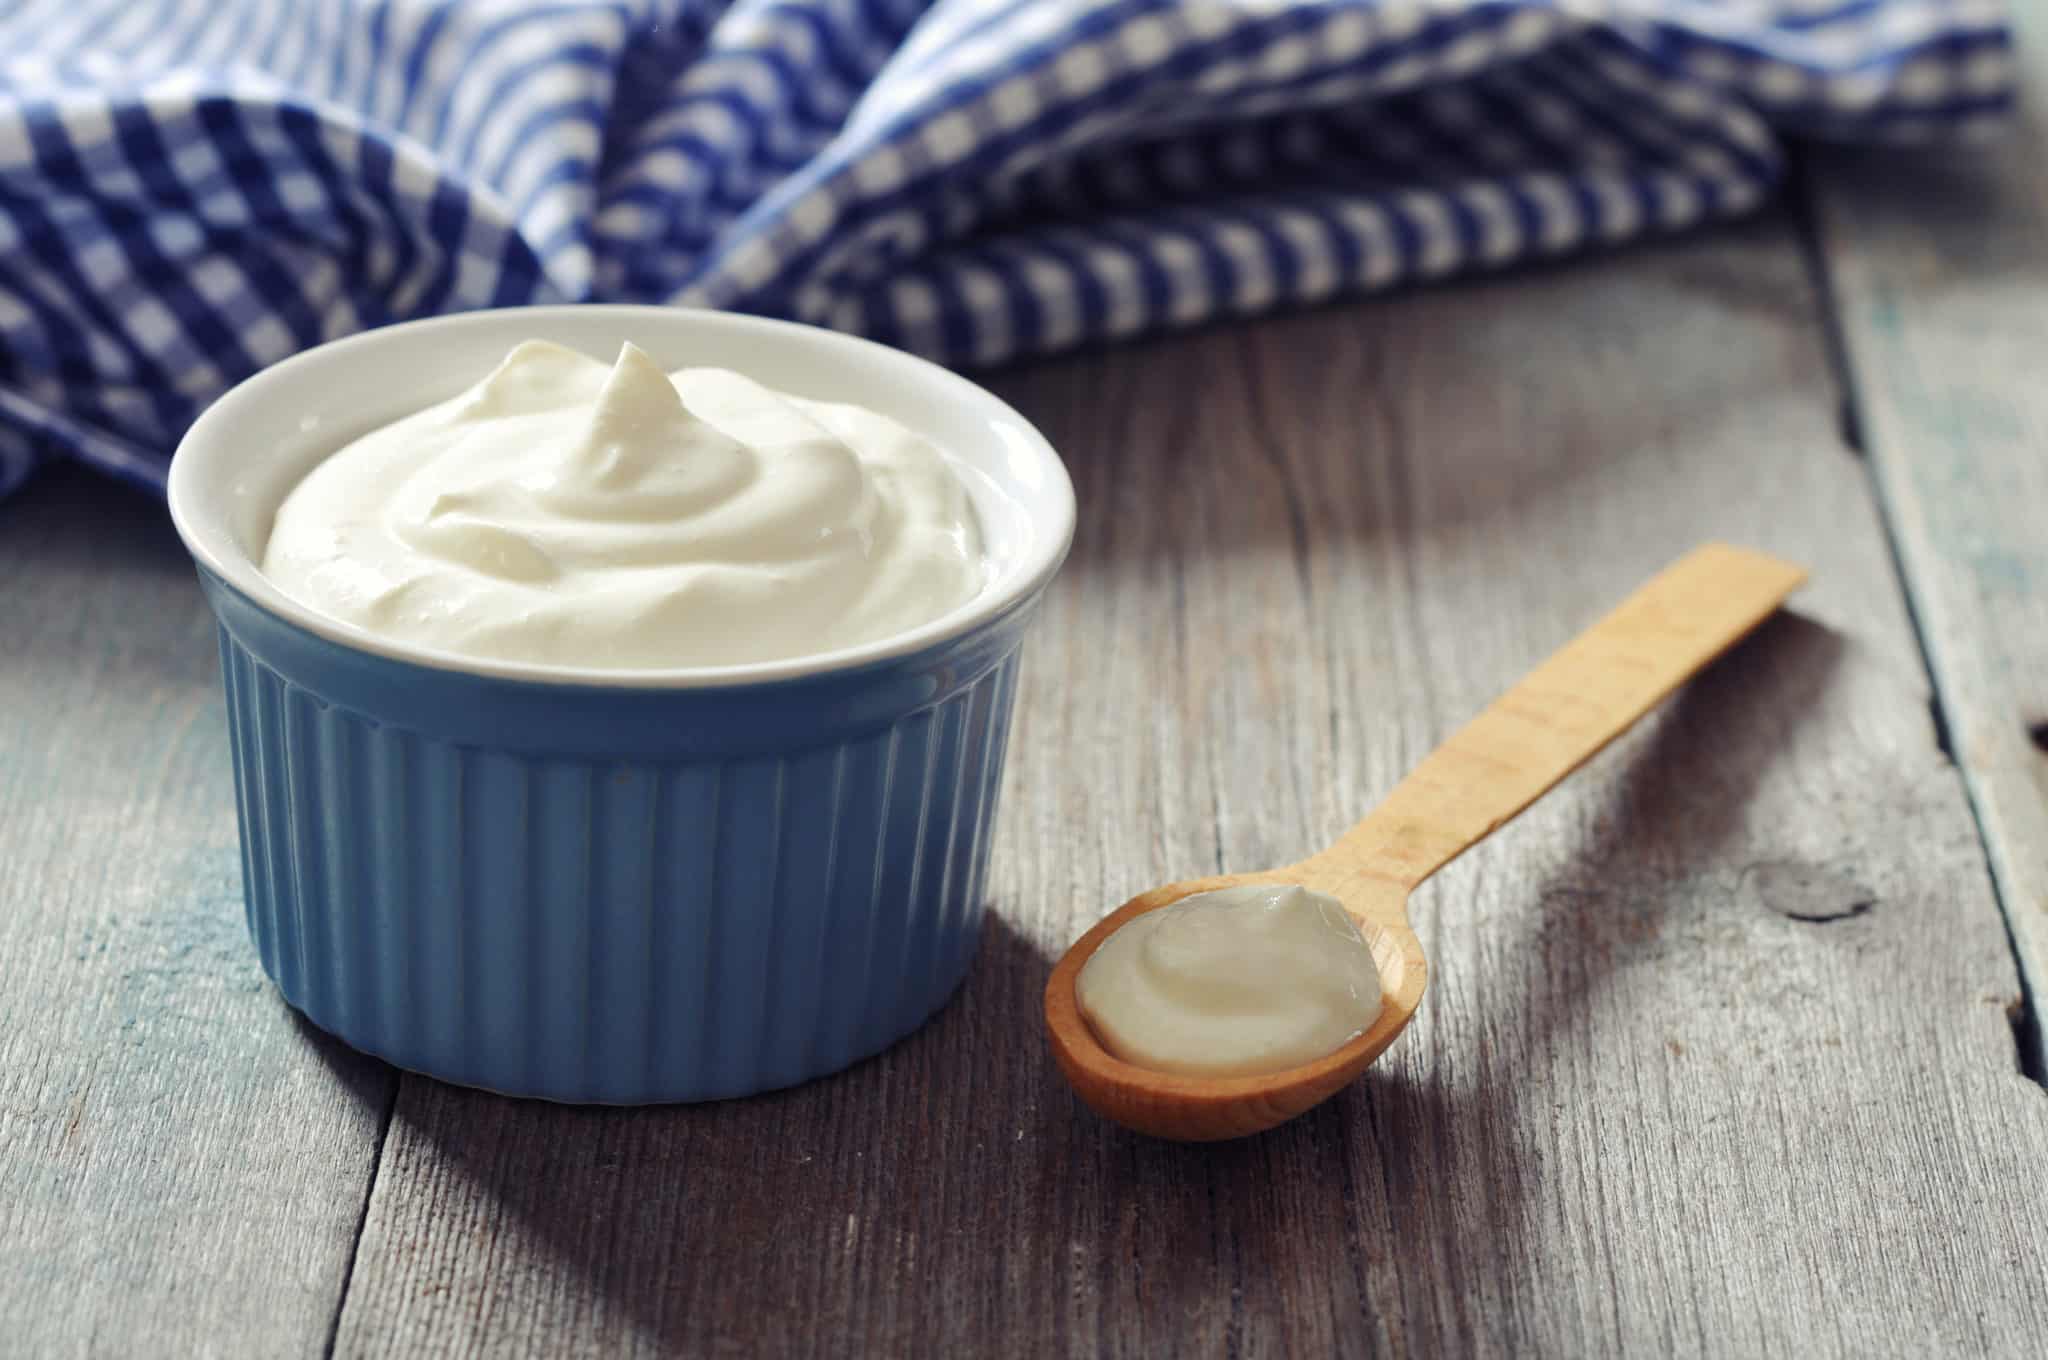 Greek yogurt in a blue bowl with wooden spoon